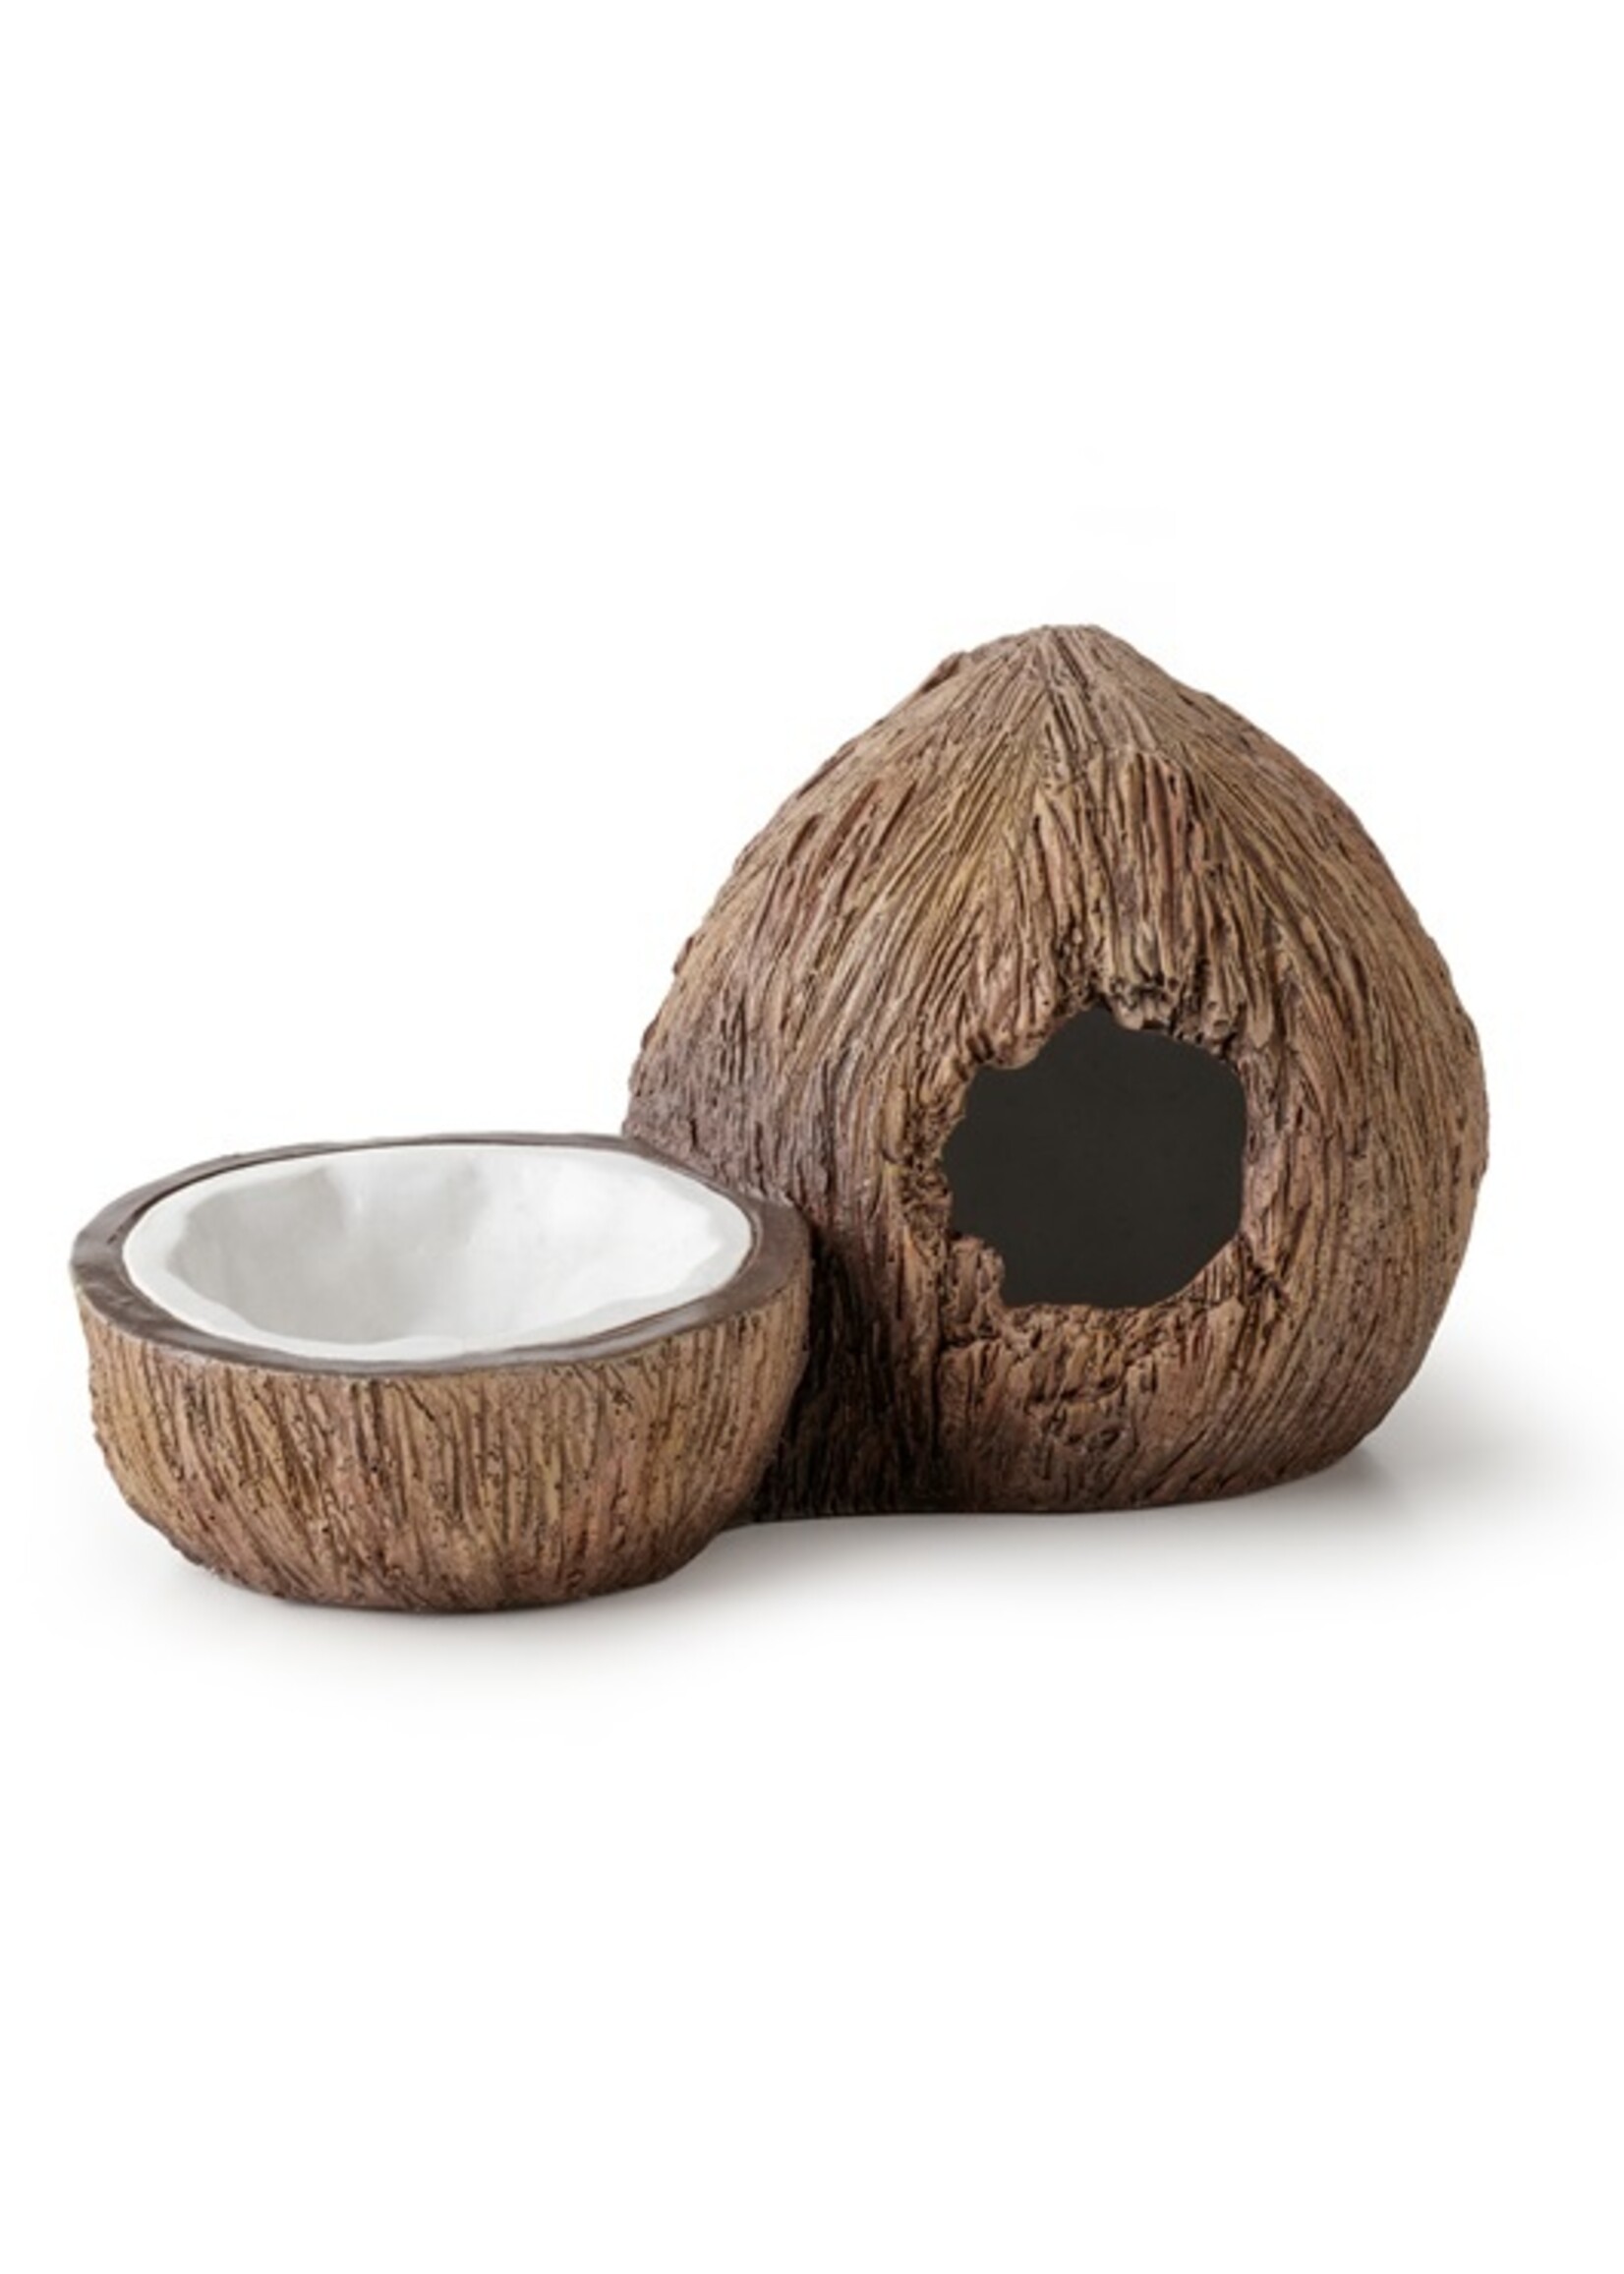 Exo Terra Exo Terra Coconut Hide w/ Water Dish